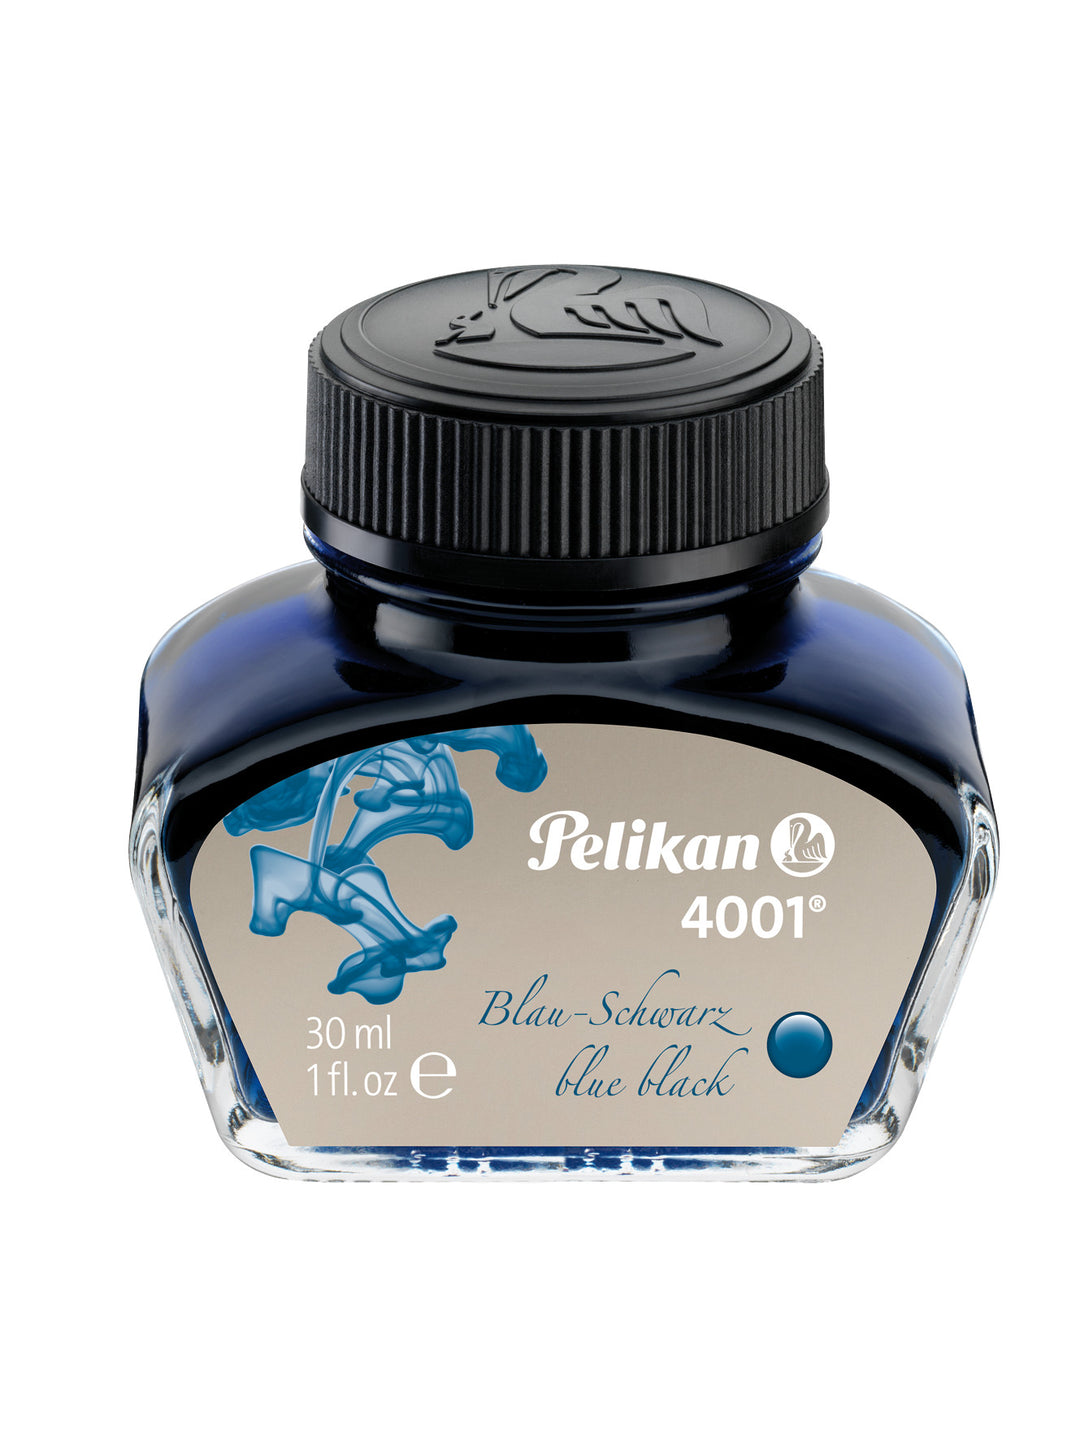 Pelikan 4001 Ink Bottle - Blue Black